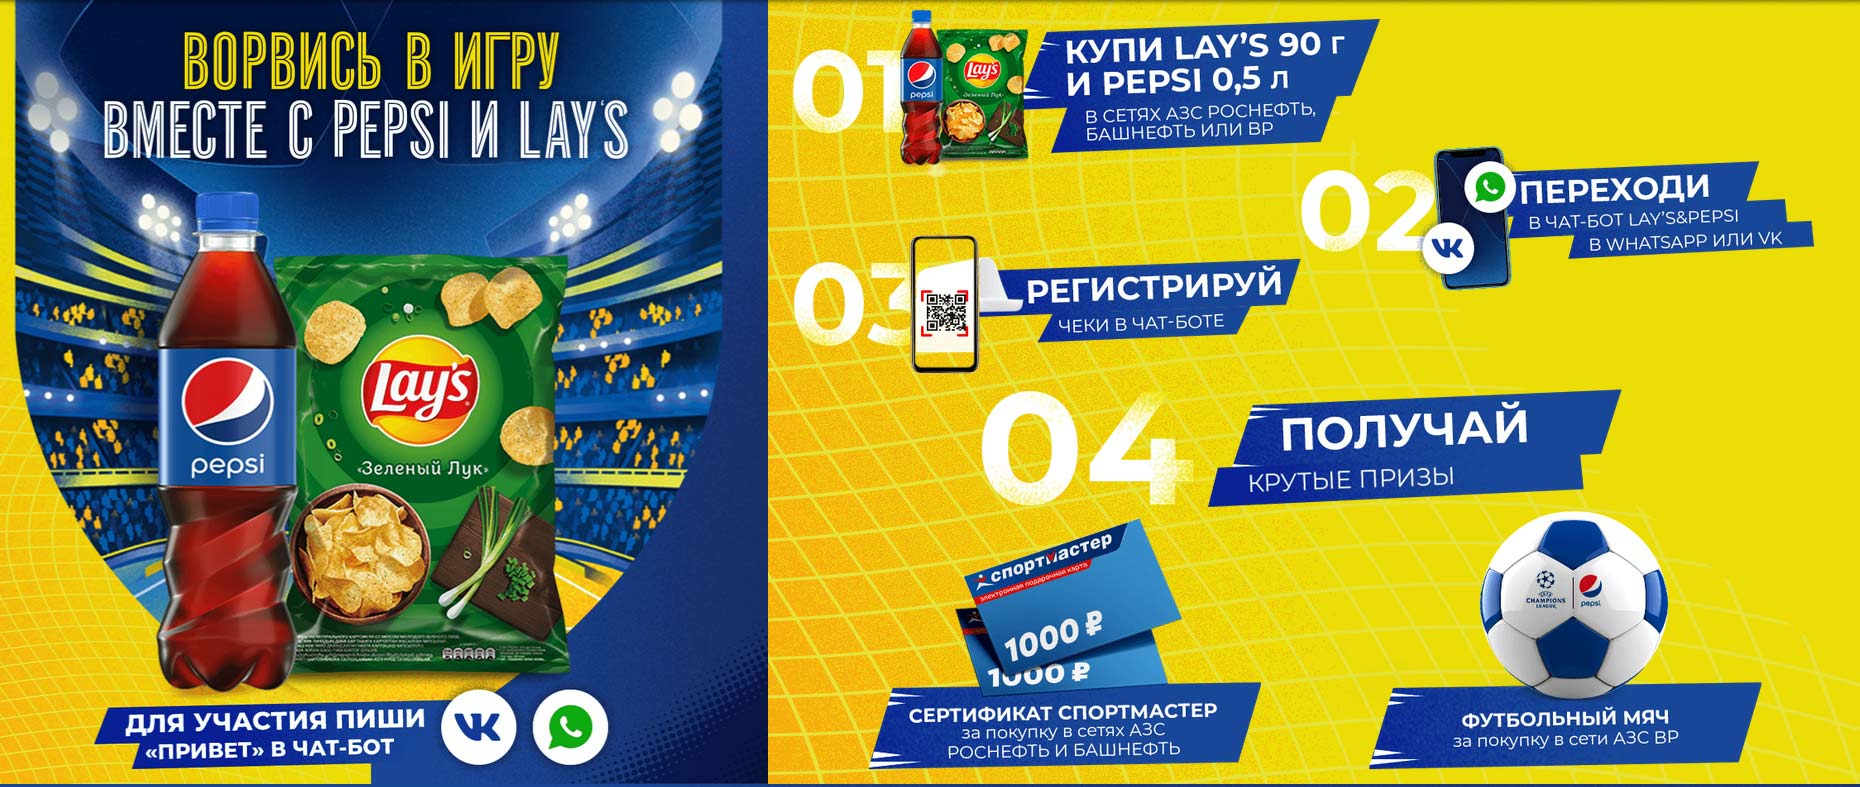 www.pepsi-lays.ru регистрация